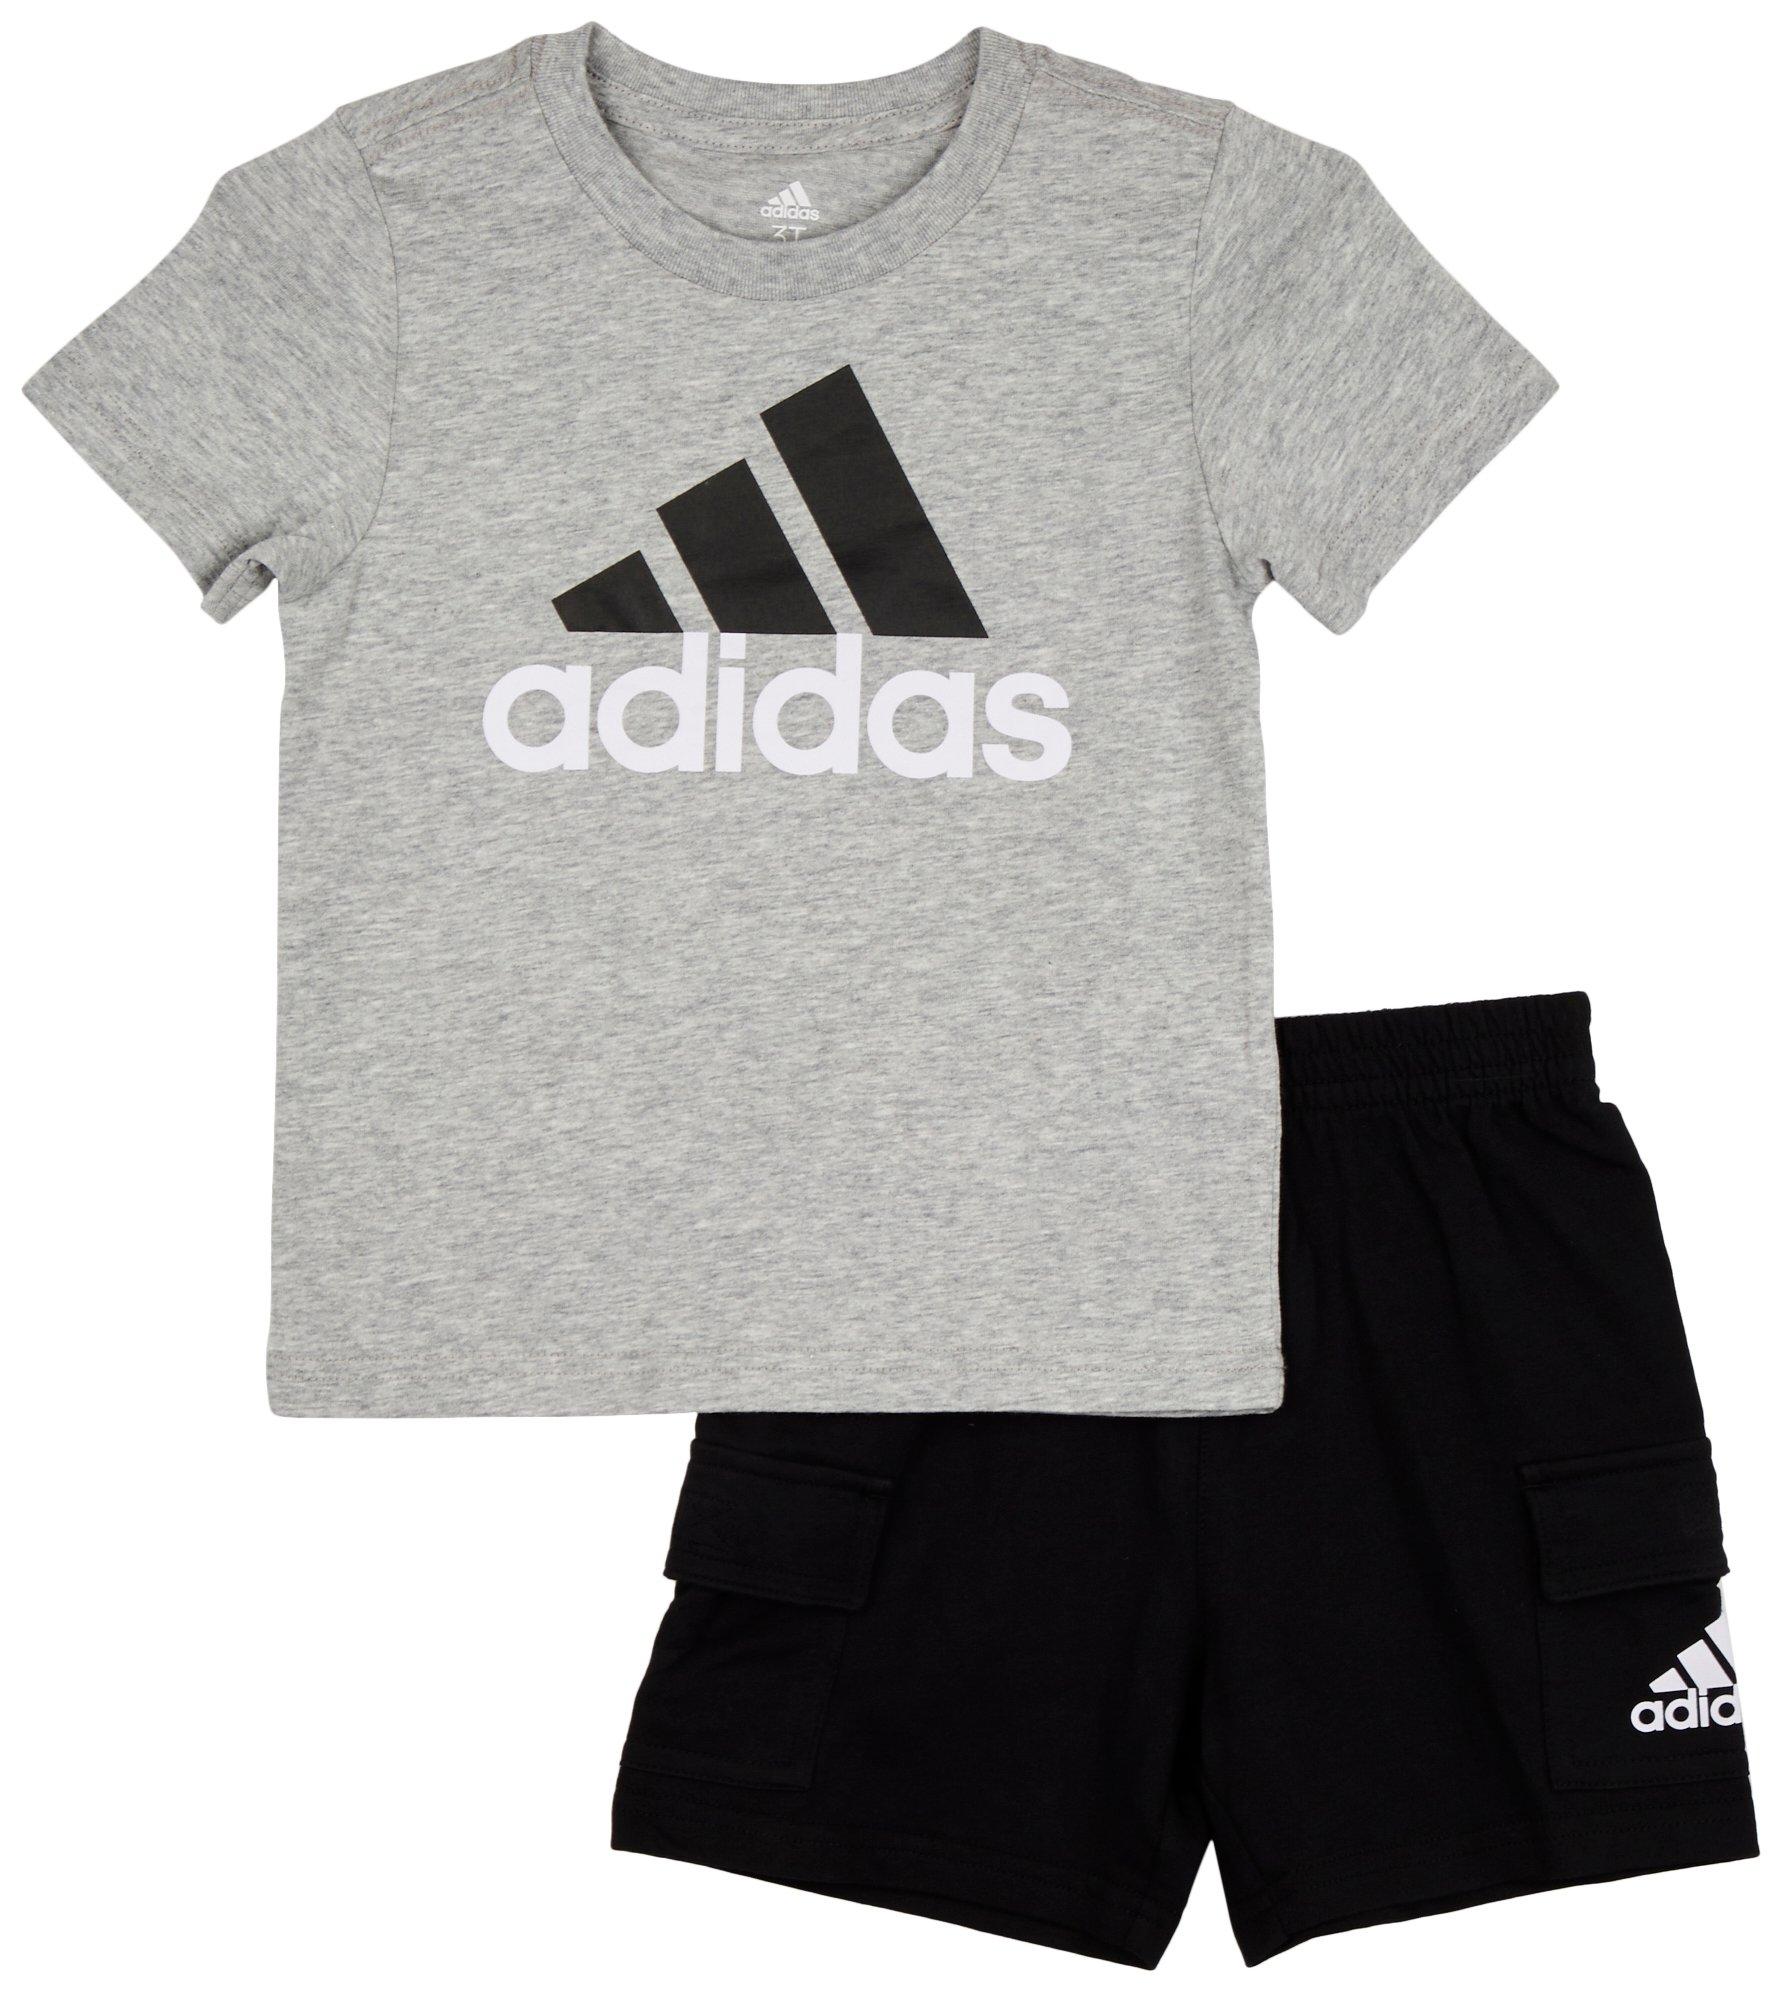 Adidas Toddler Boys 2-pc. French Terry Cargo Shorts Set